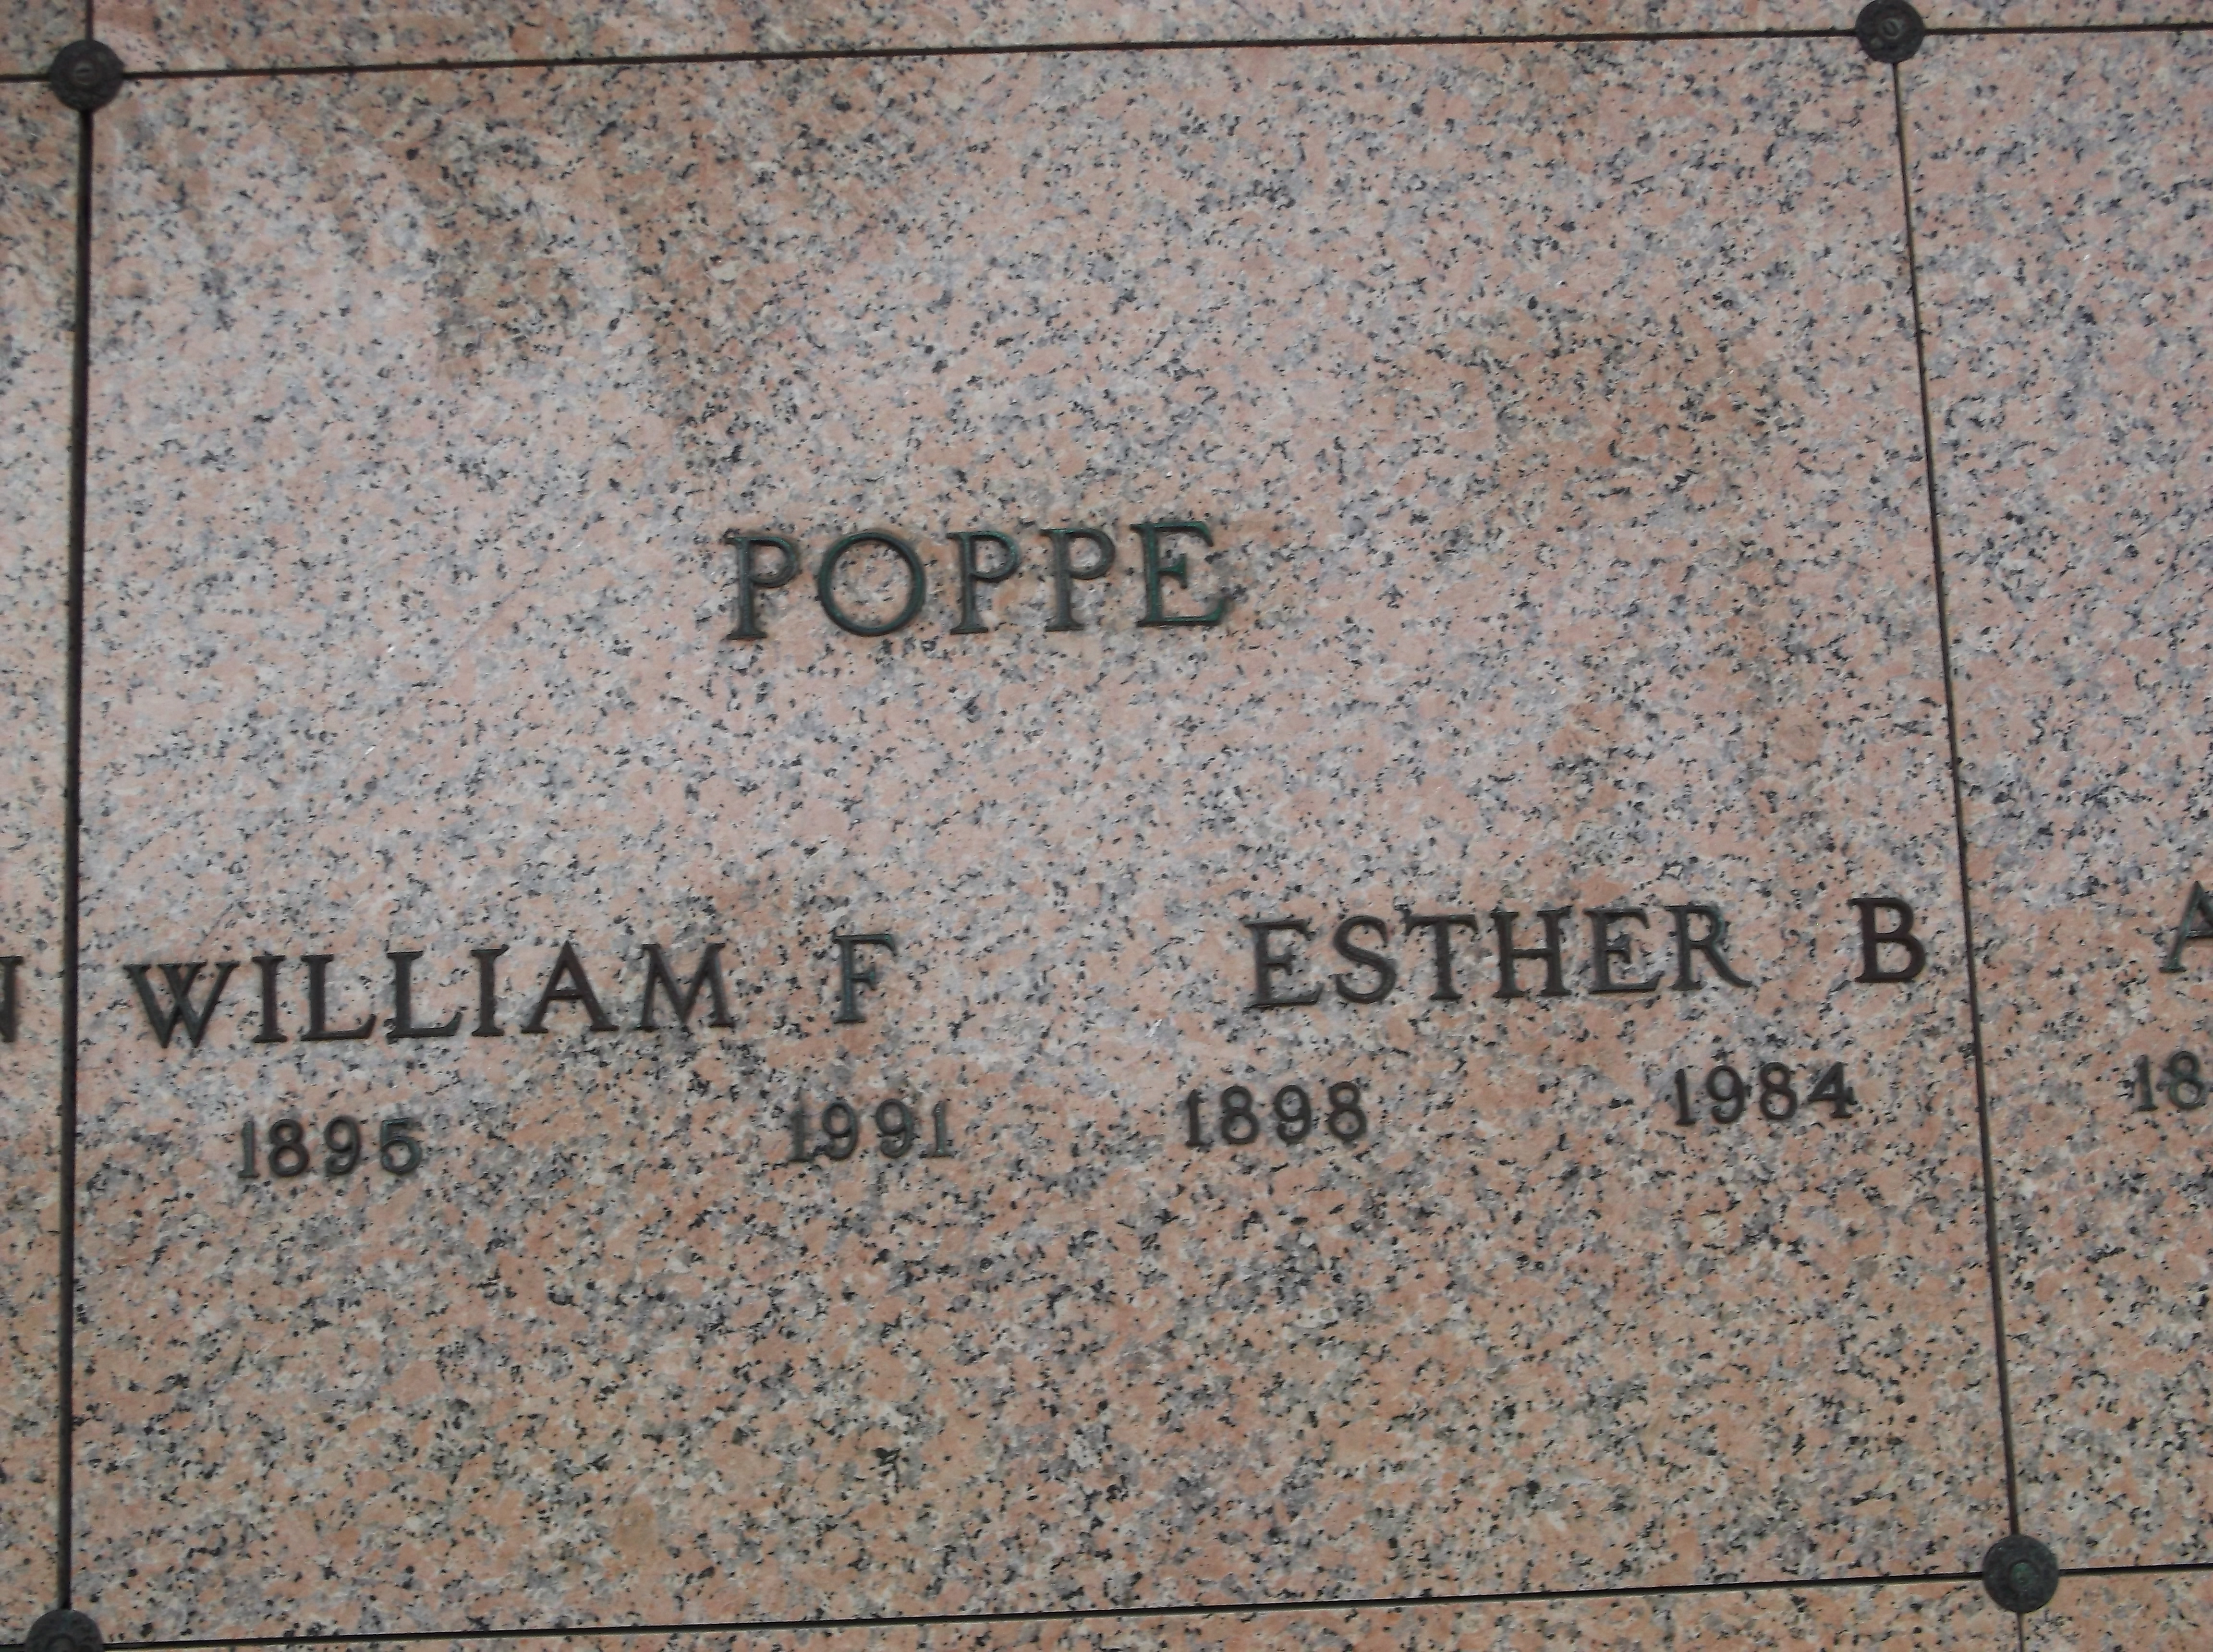 Esther B Poppe